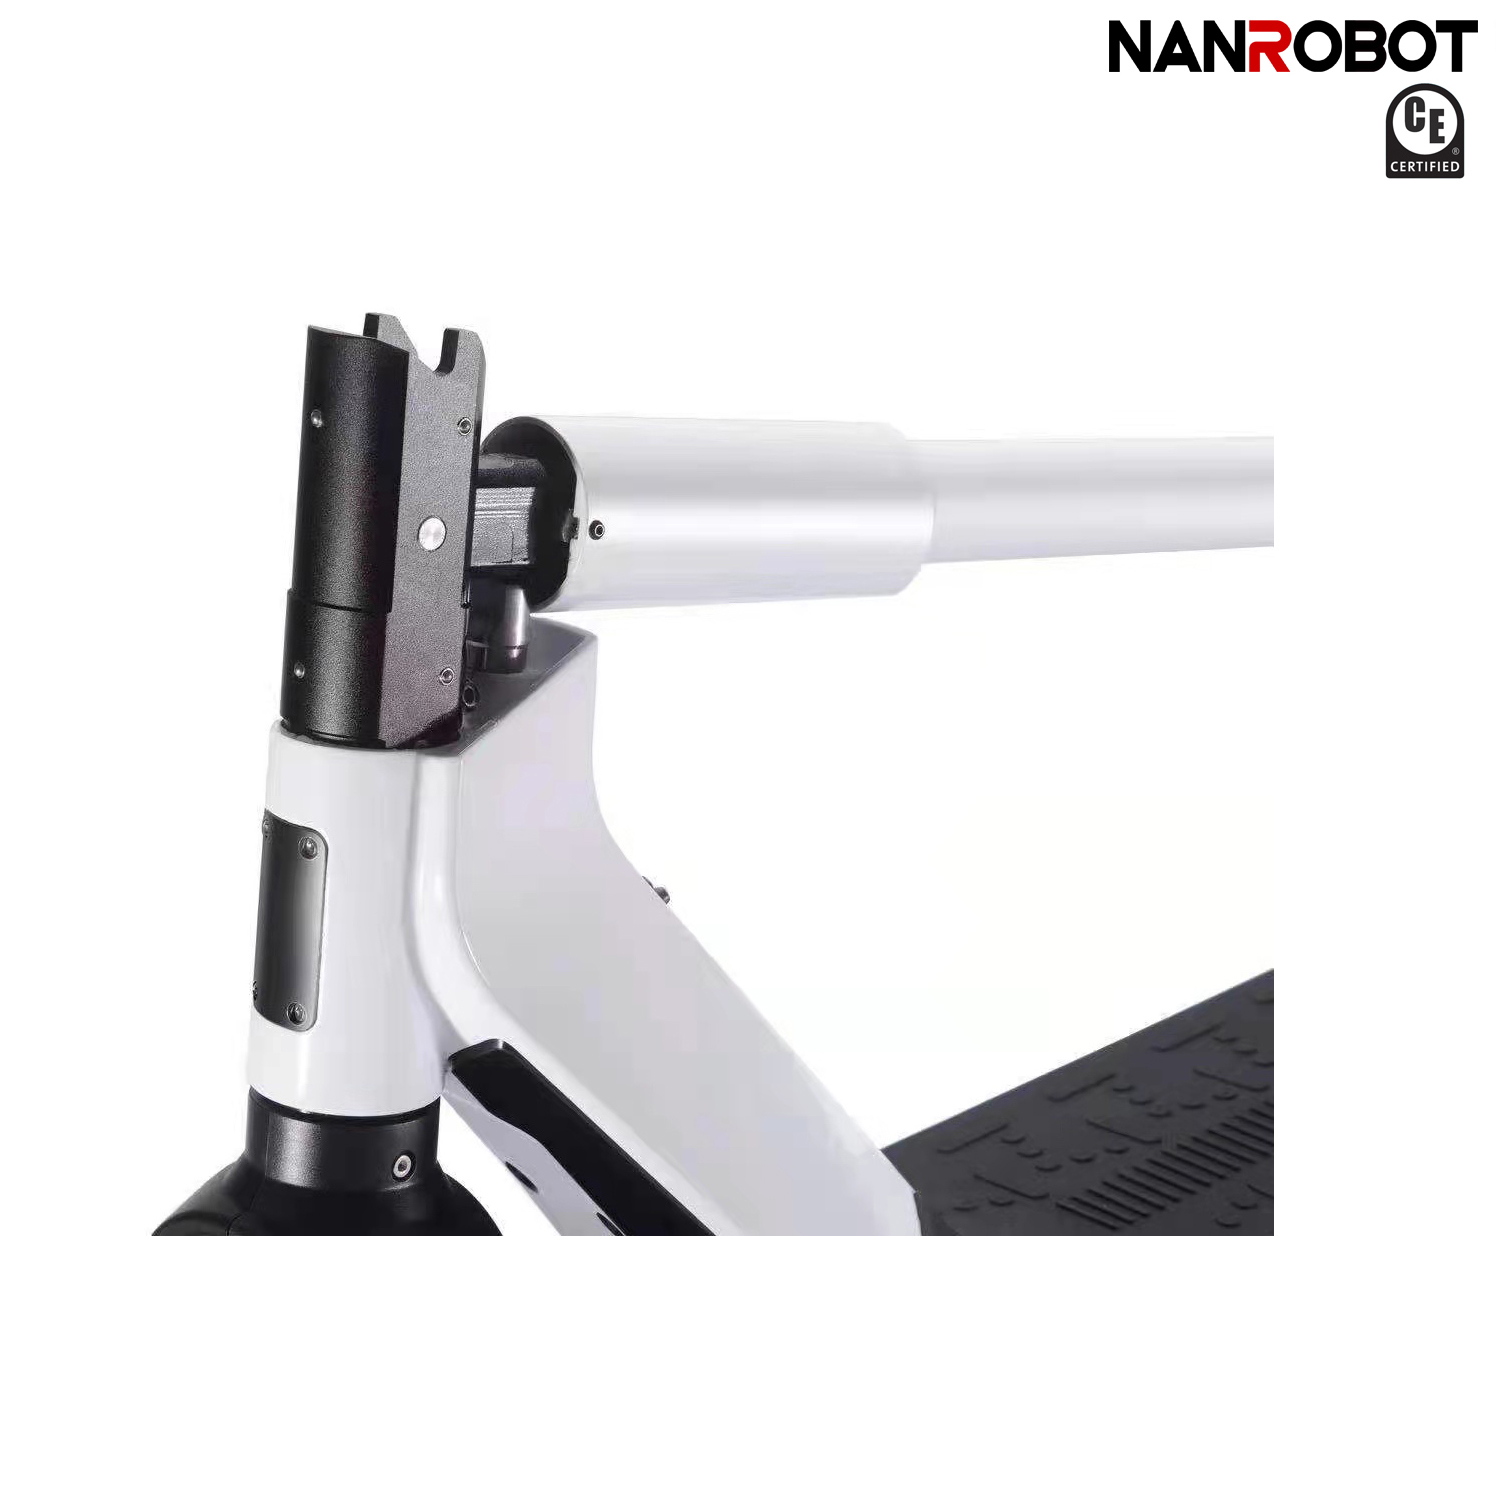 NANROBOT X-Spark ELECTRIC SCOOTER